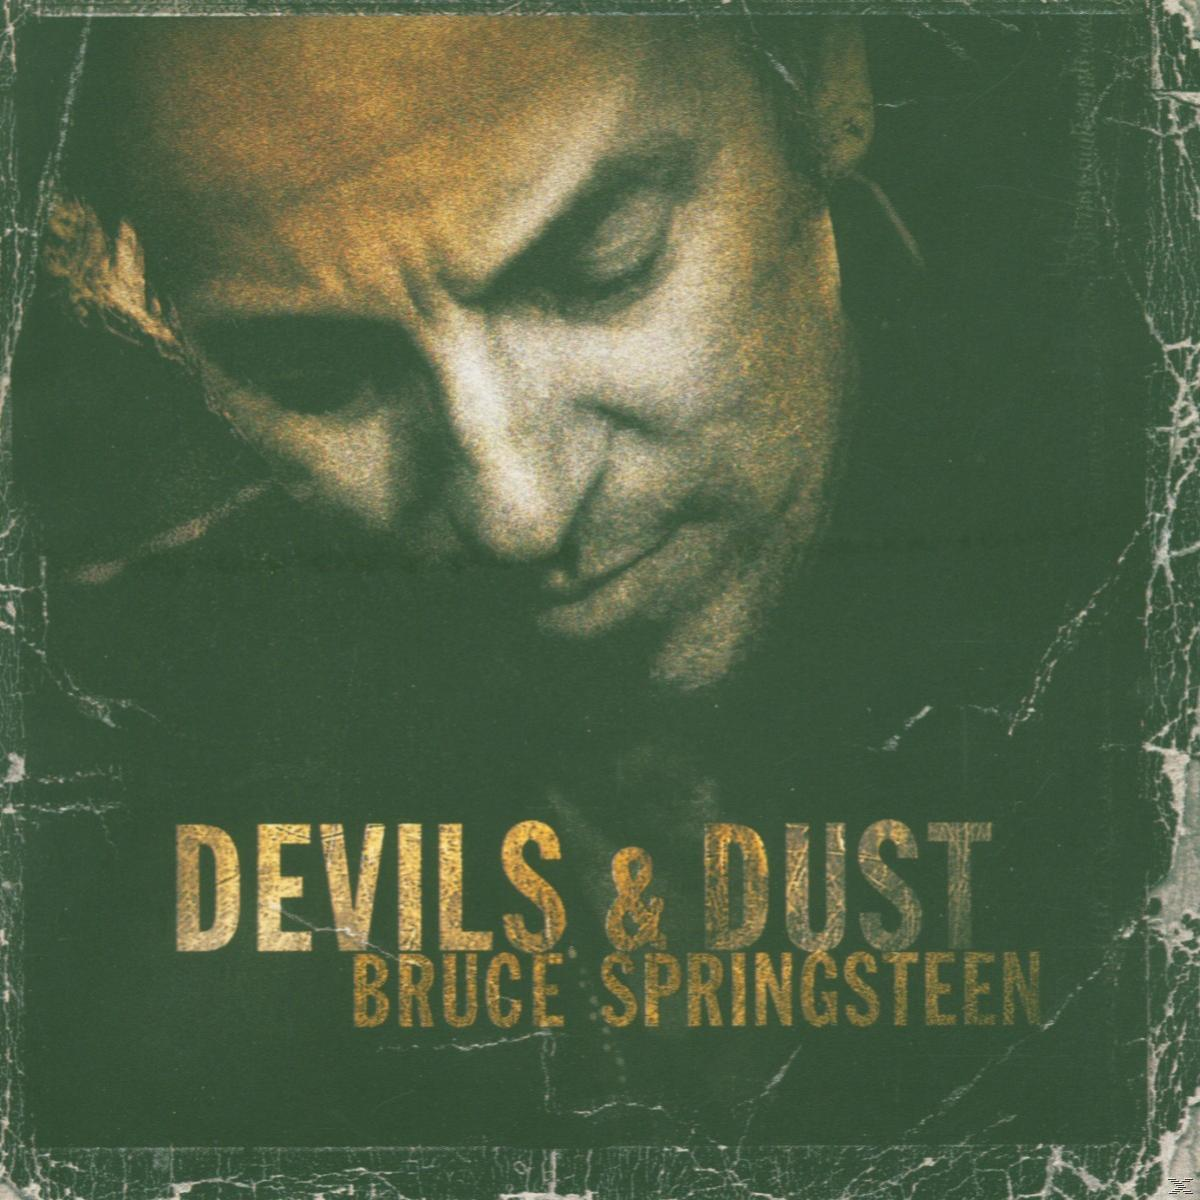 Bruce Springsteen - Devils & DVD-Video-Single) Dust (CD + 